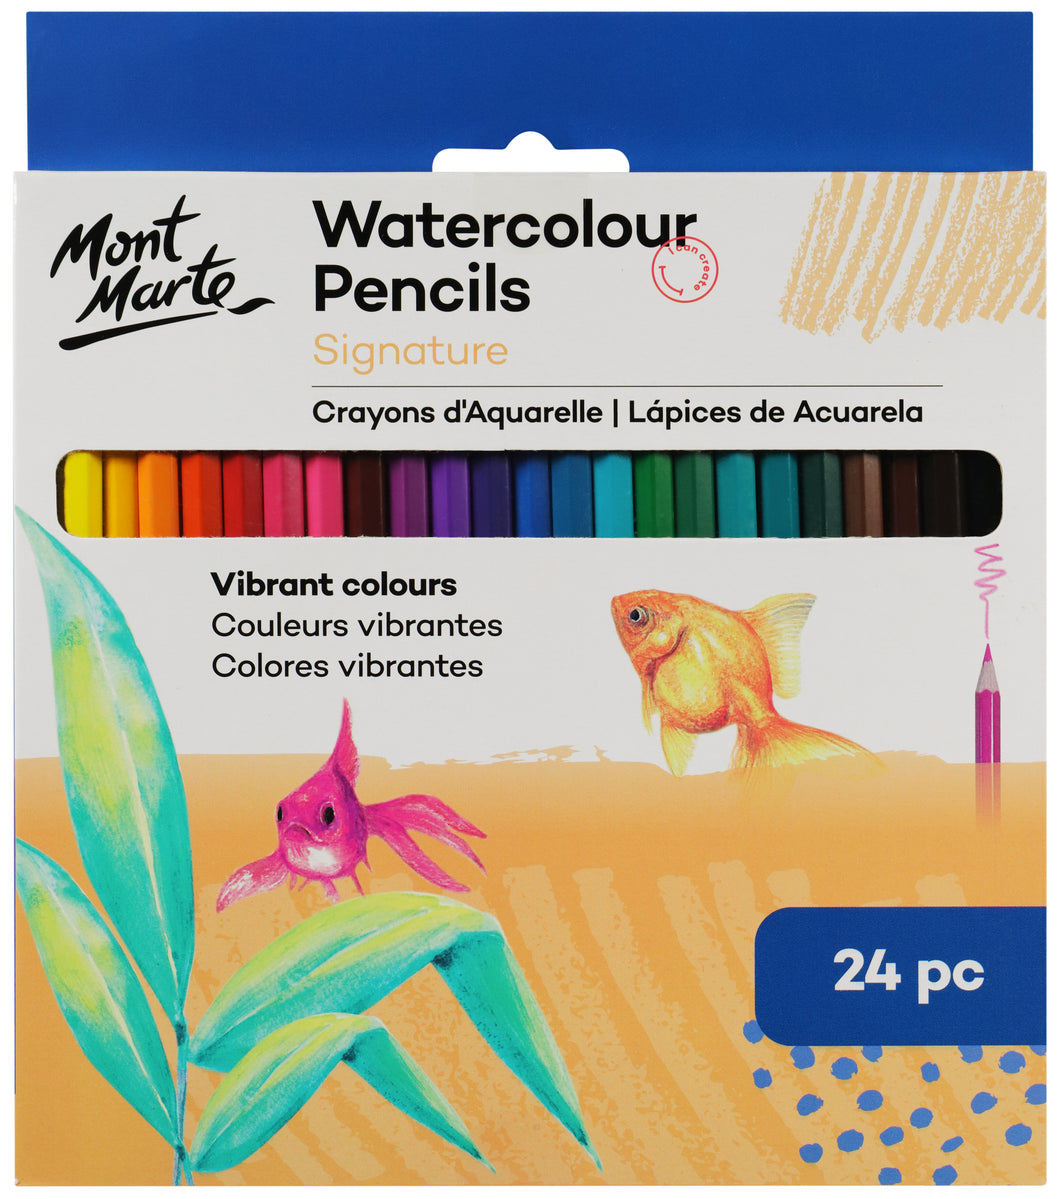 Monte Marte Watercolour Pencils 24pc